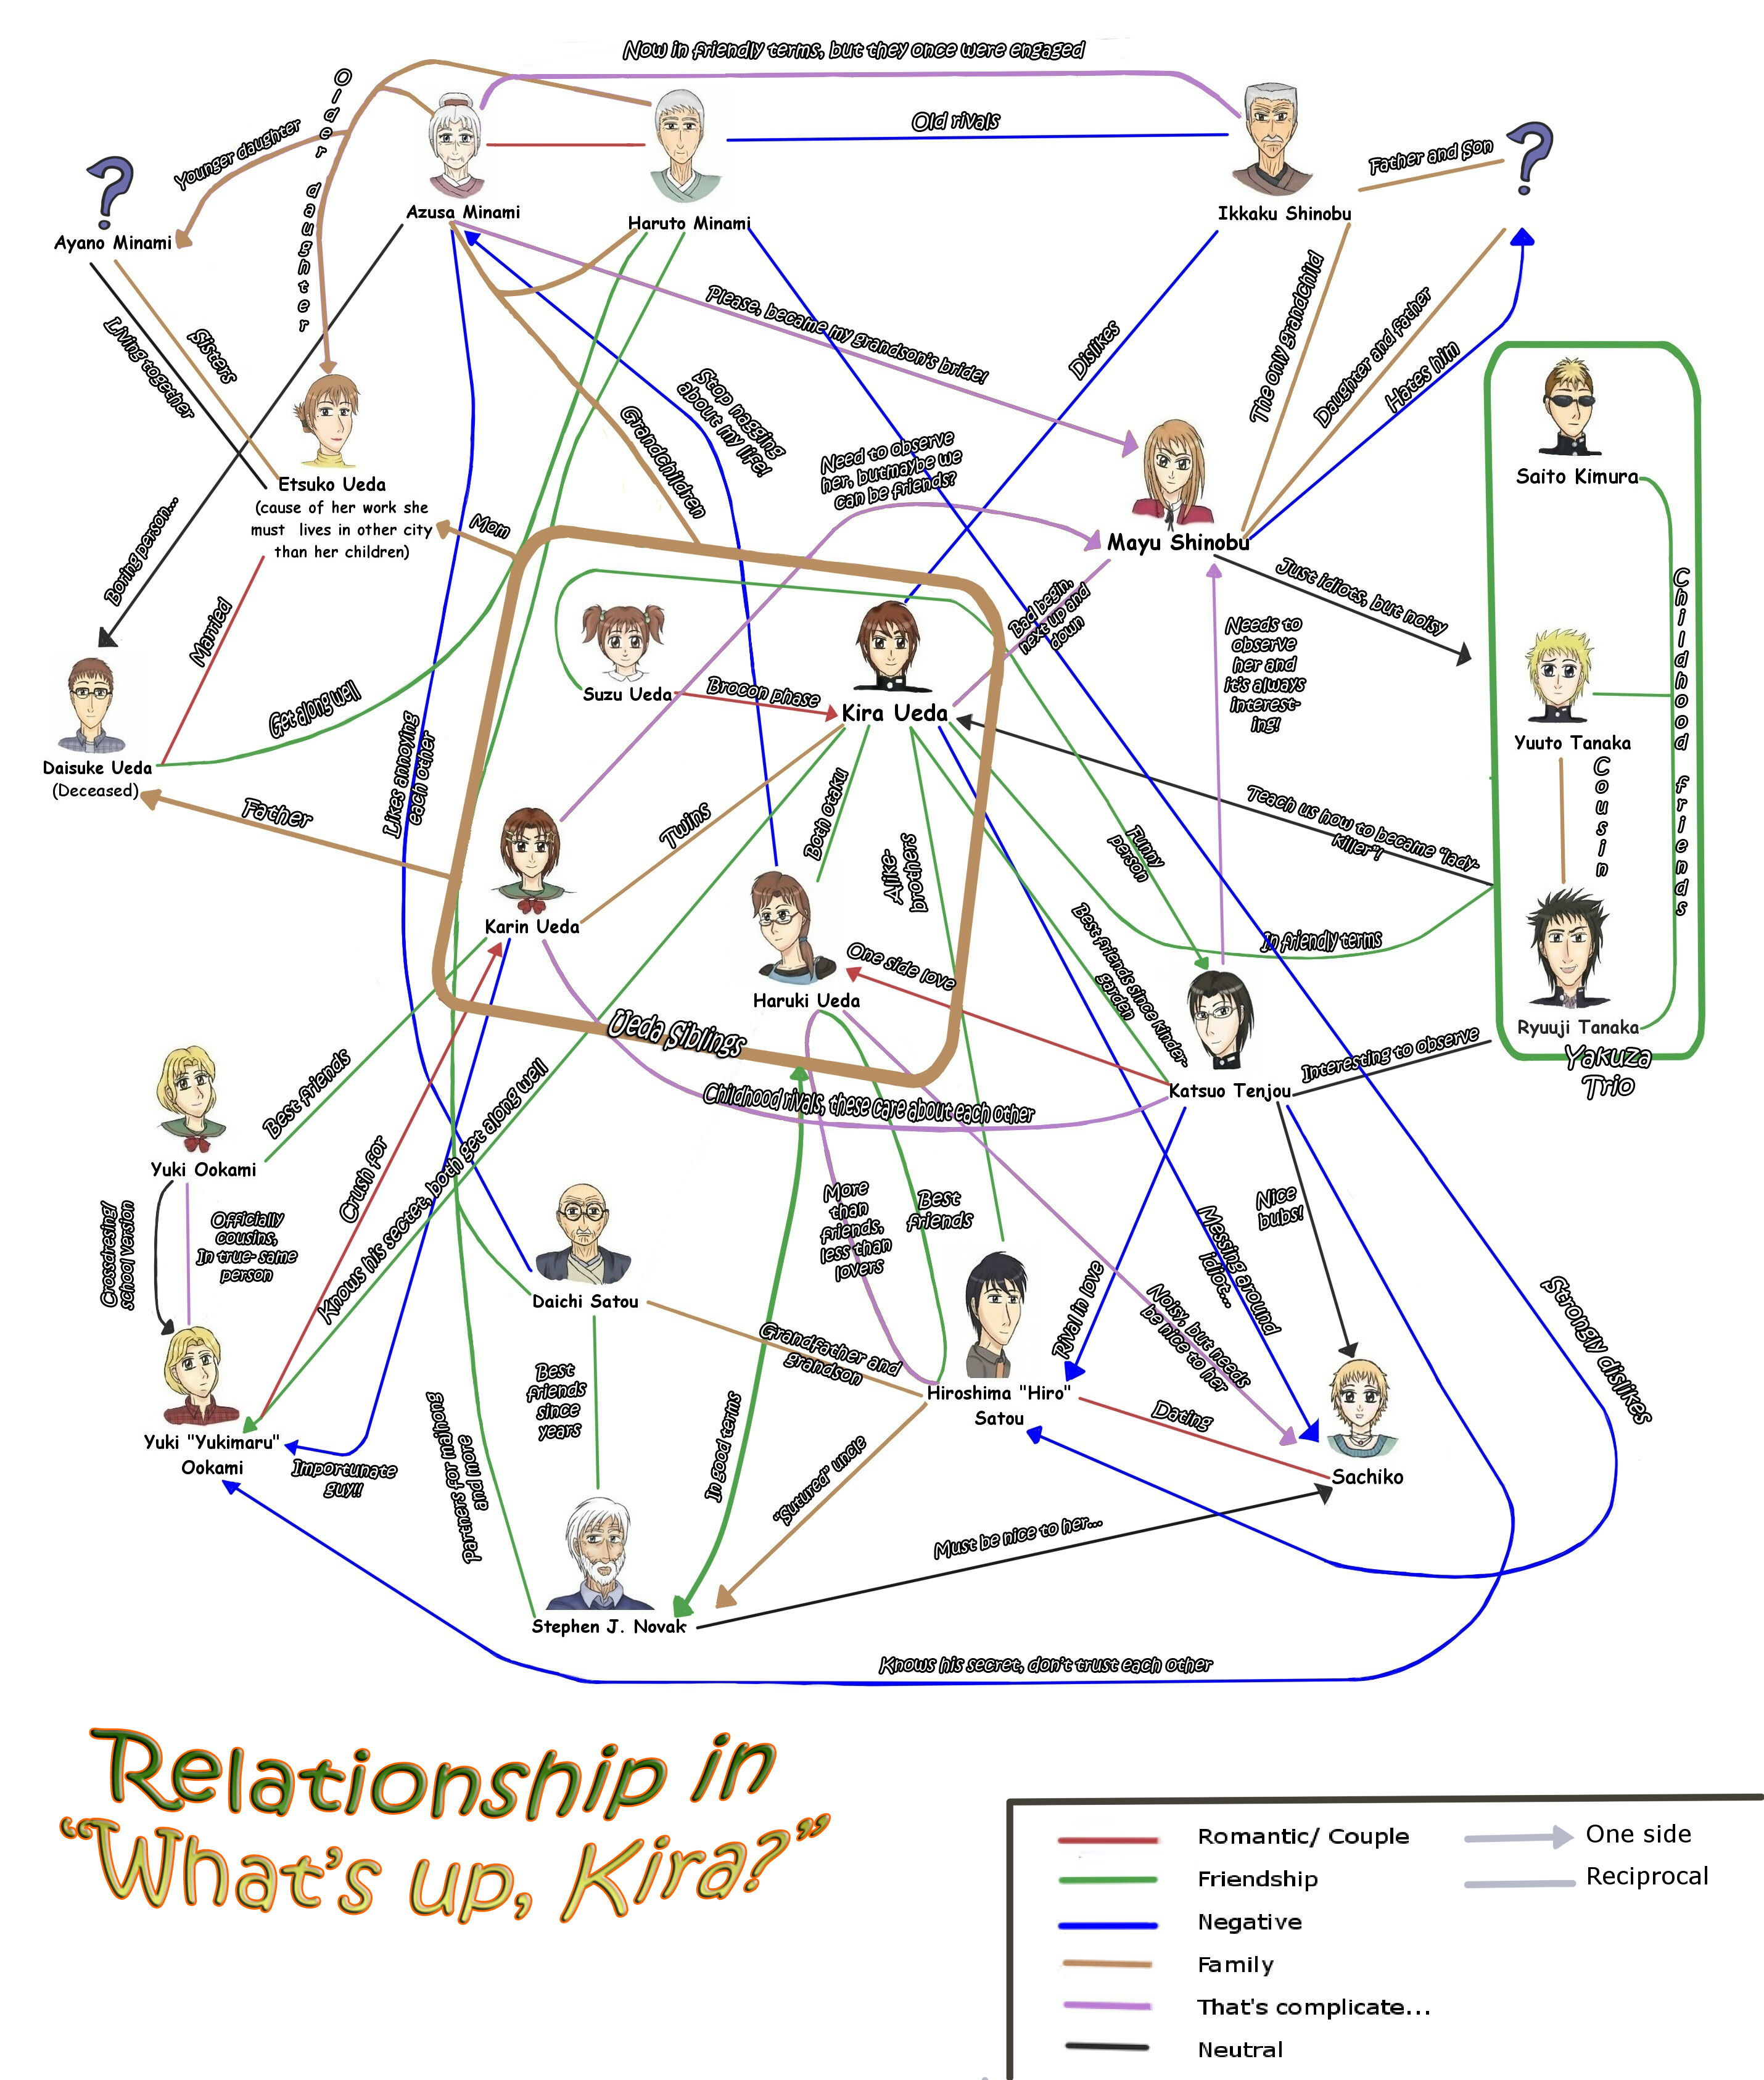 Overwatch Relationships Chart